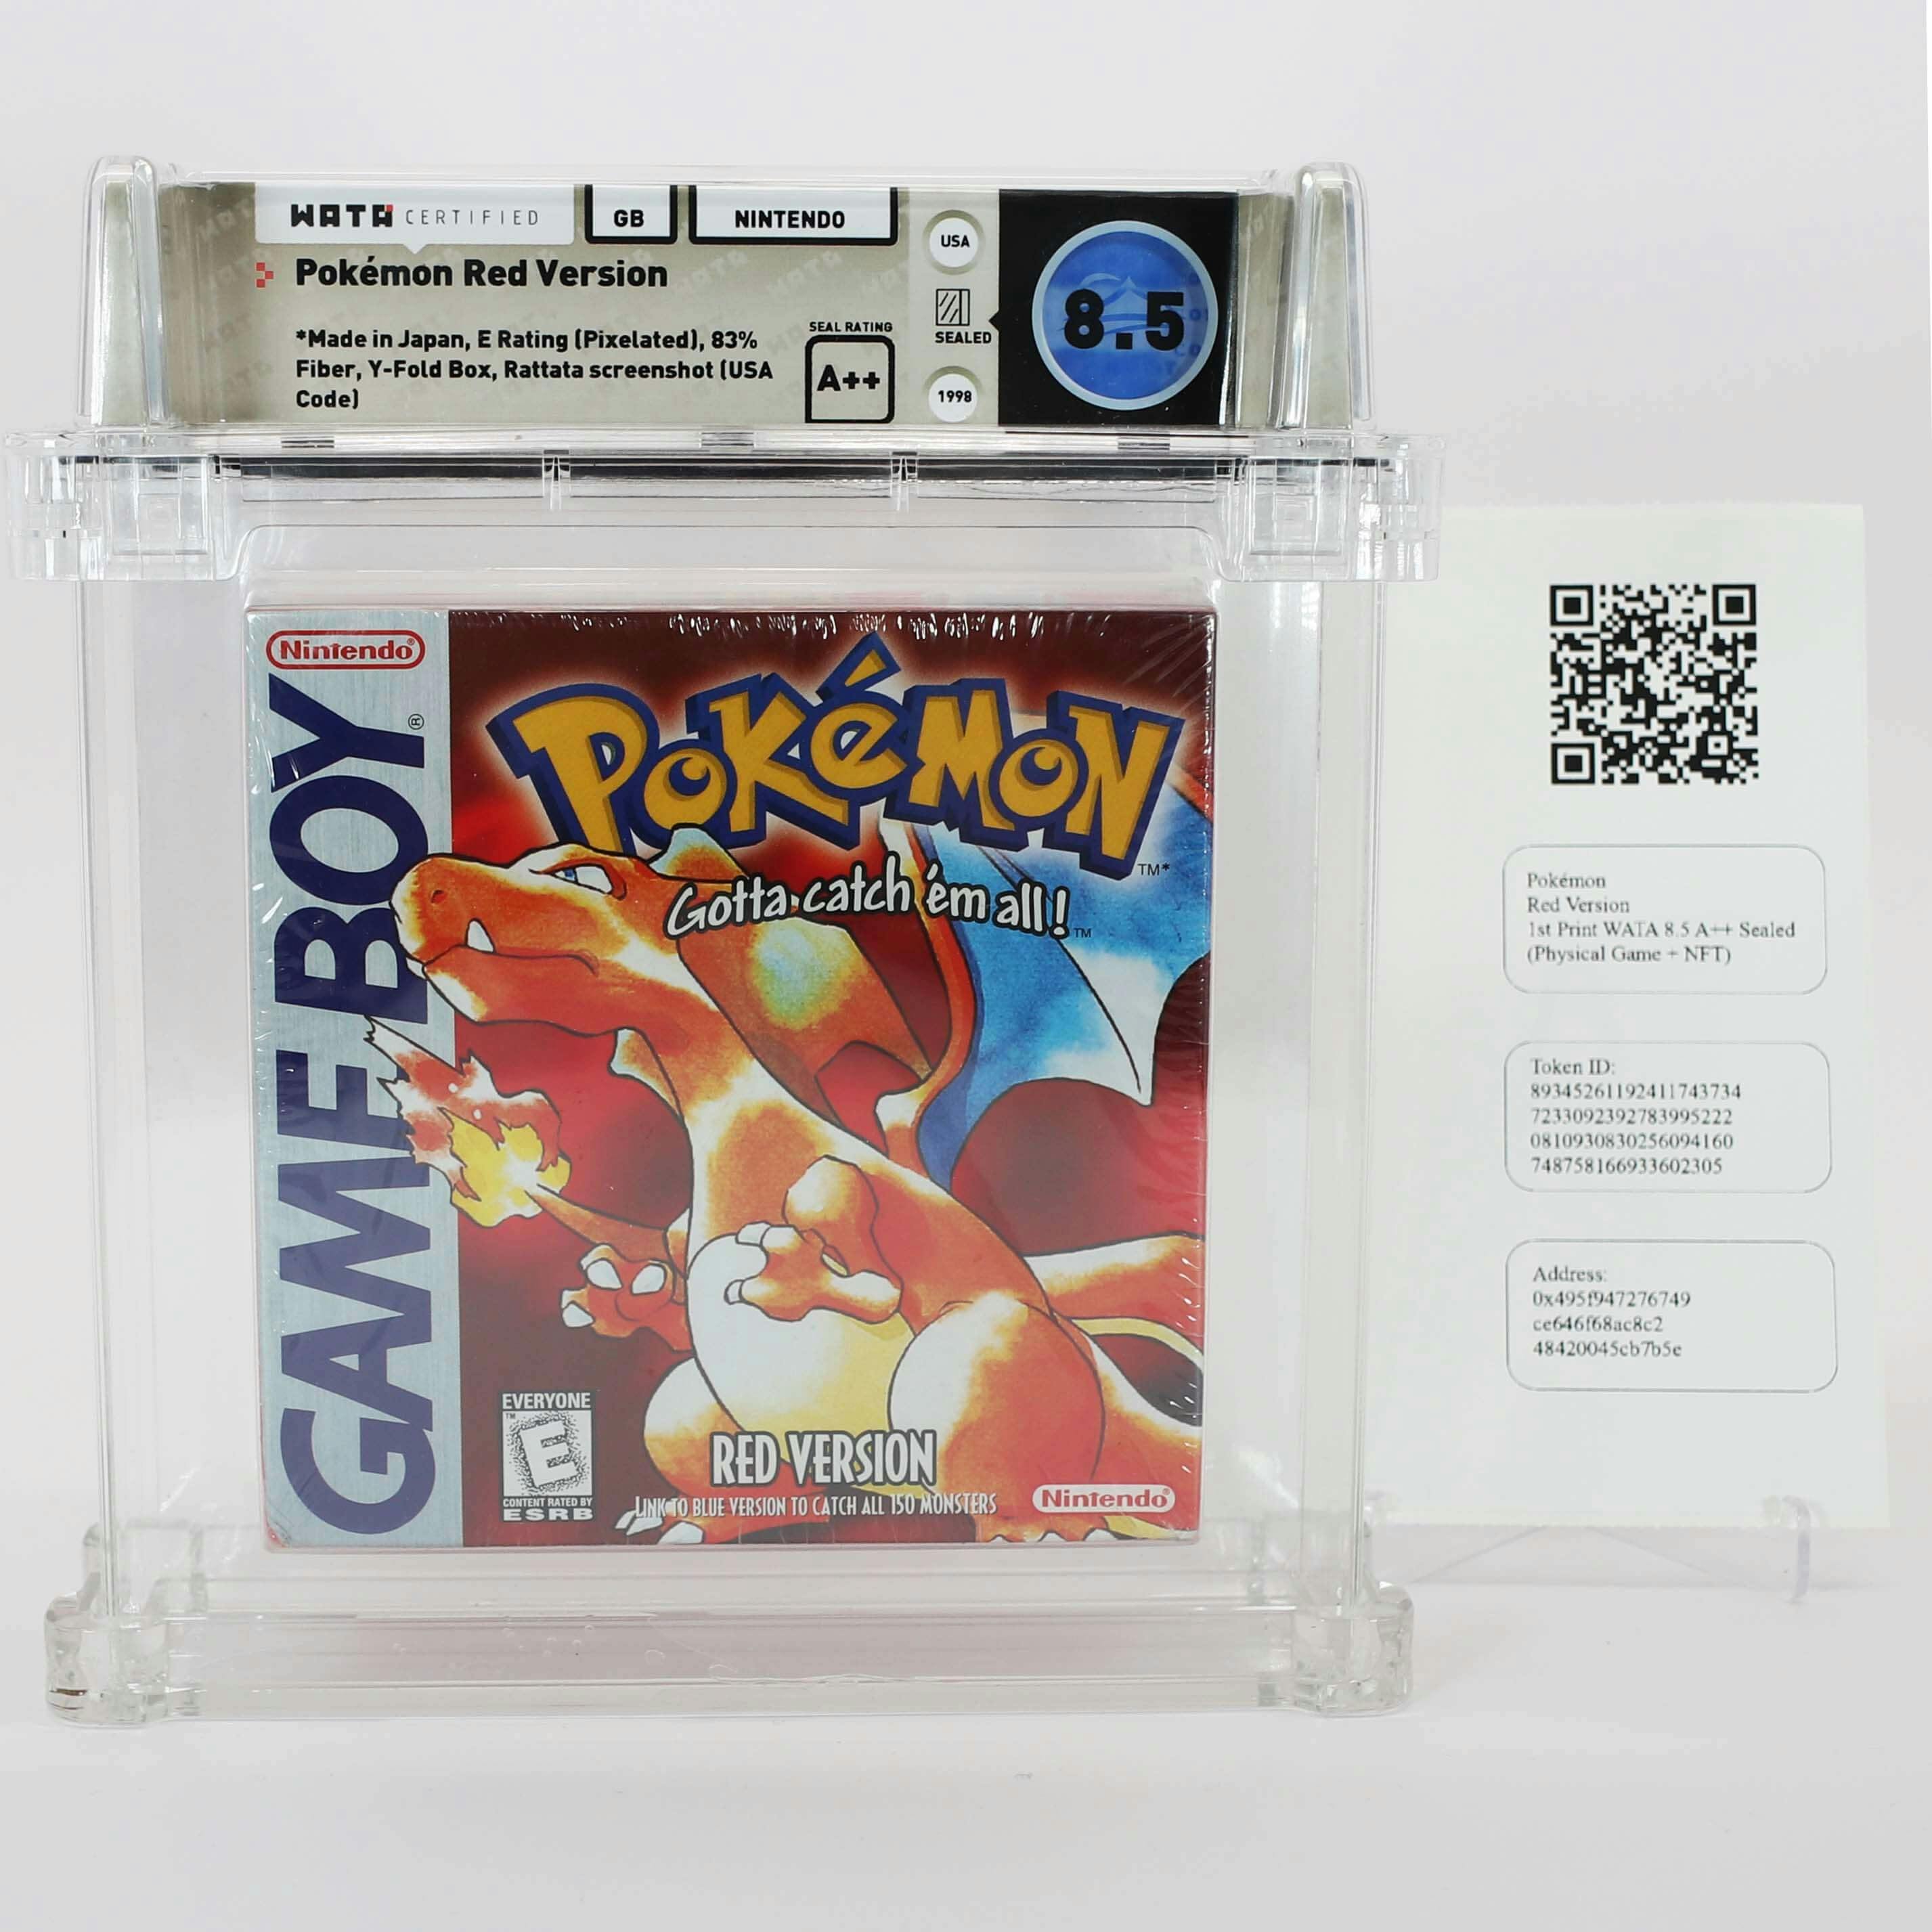 Pokémon Red Version 1st Print WATA 8.5 A++ Sealed 